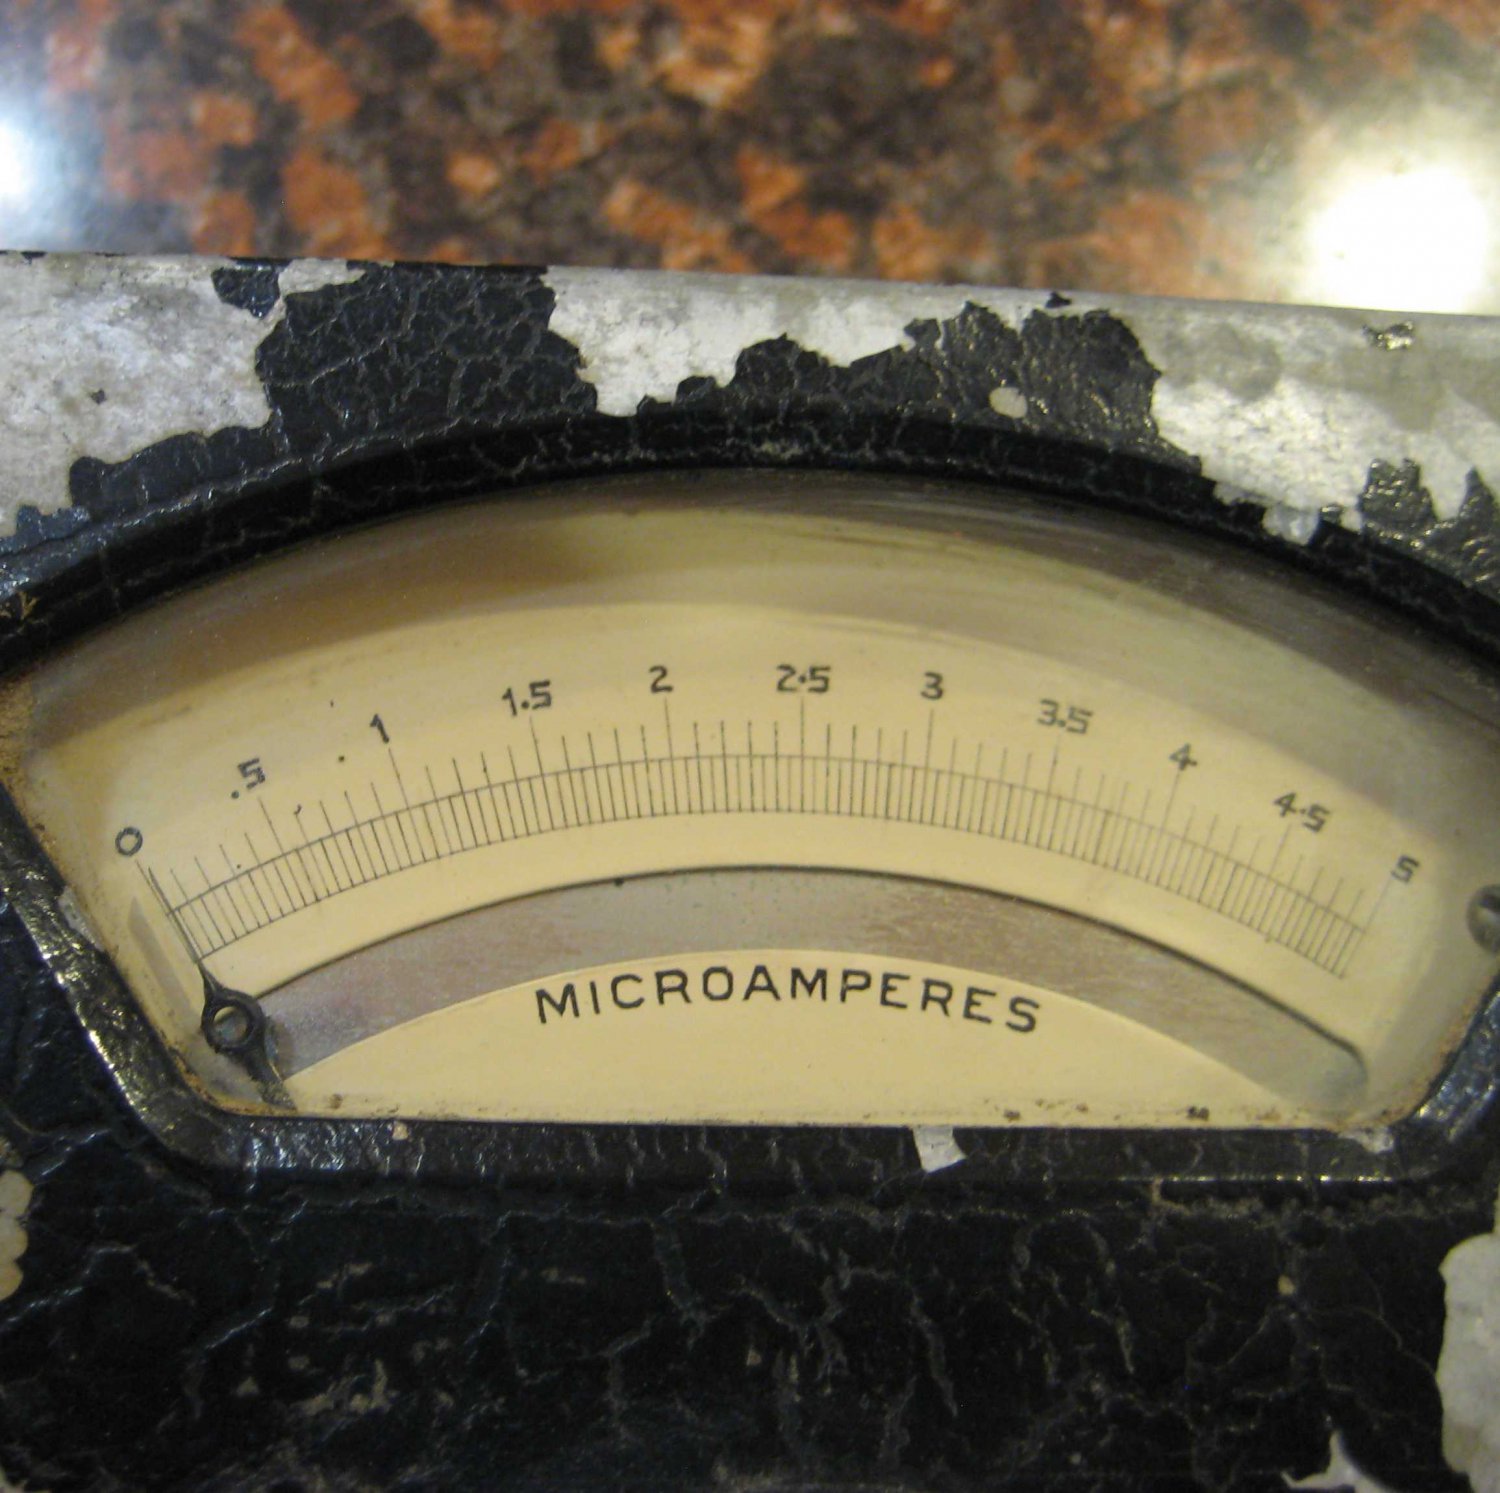 Electronic Test Equipment, Rawson DC Microampere Meter Type 507 Range 0-5 microamperes